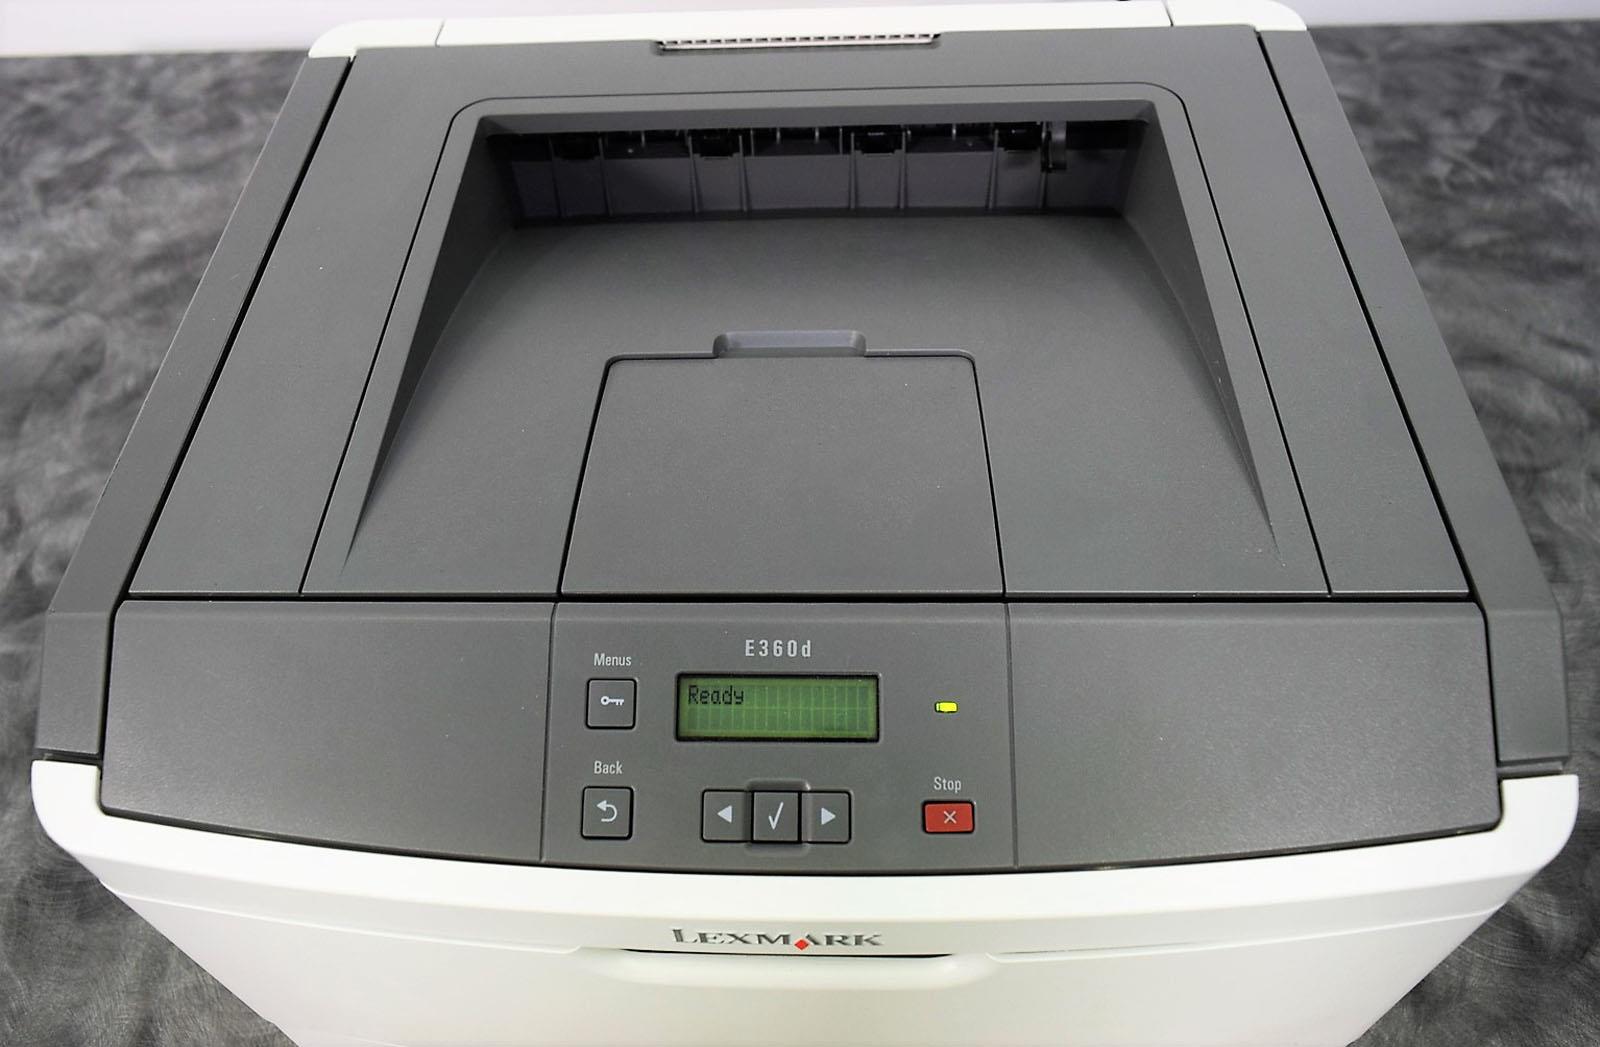 cbab 2 sided printer